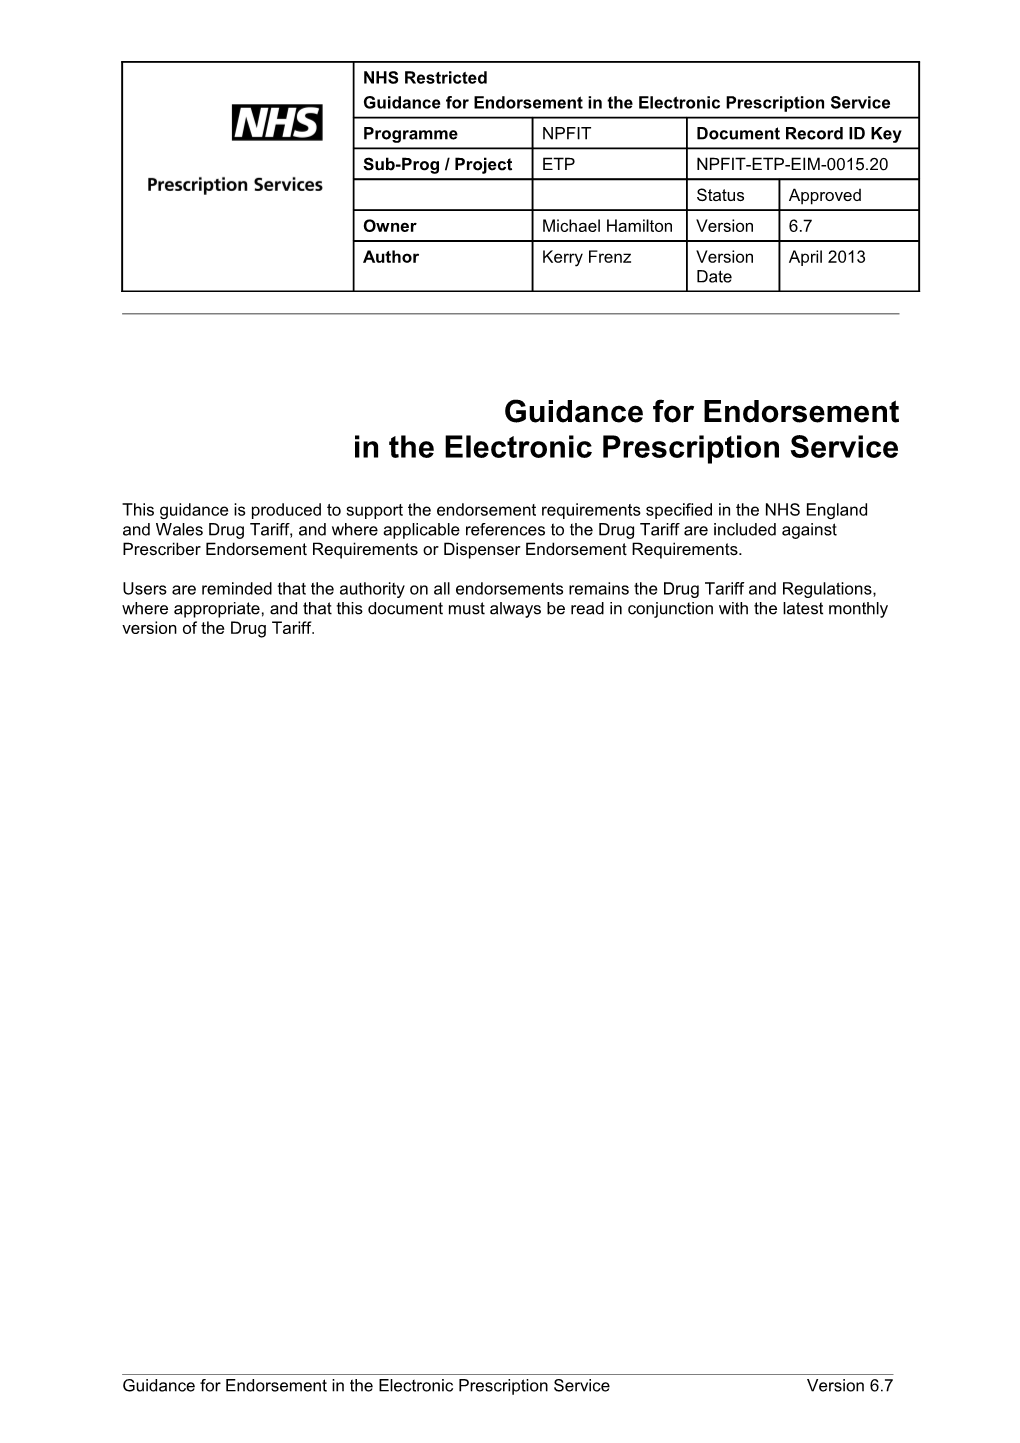 Guidance for Endorsement in the Electronic Prescription Service